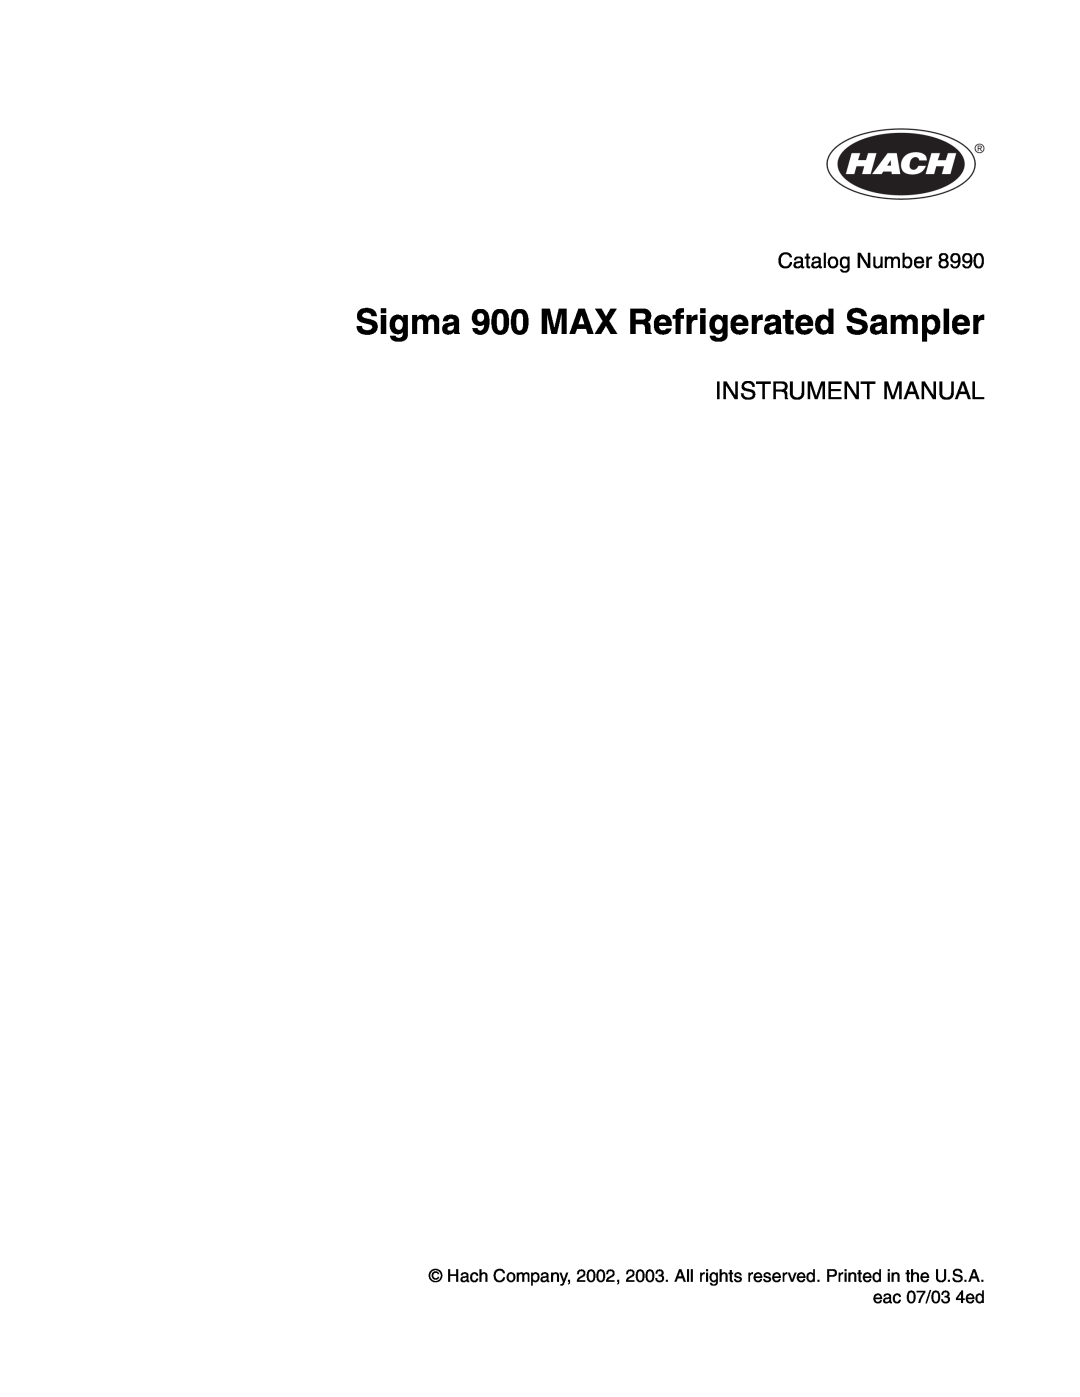 Hach manual Sigma 900 MAX Refrigerated Sampler, Catalog Number, Instrument Manual 